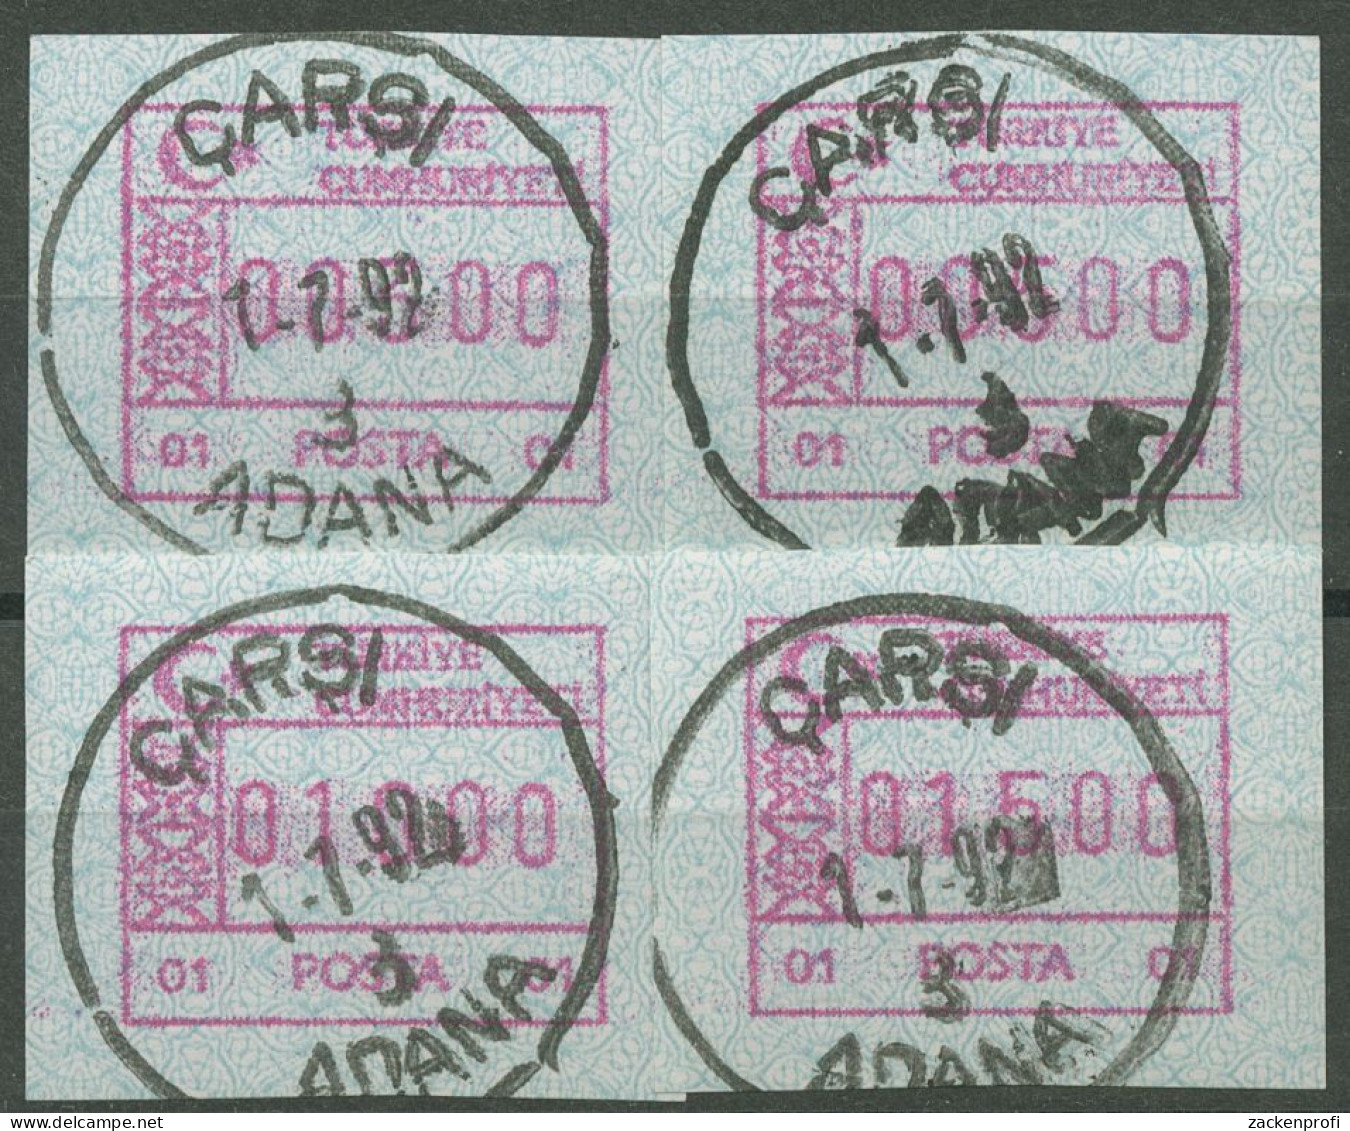 Türkei ATM 1992 Ornamente Automat 01 01, Satz 4 Werte ATM 2.1 S1 Gestempelt - Automatenmarken